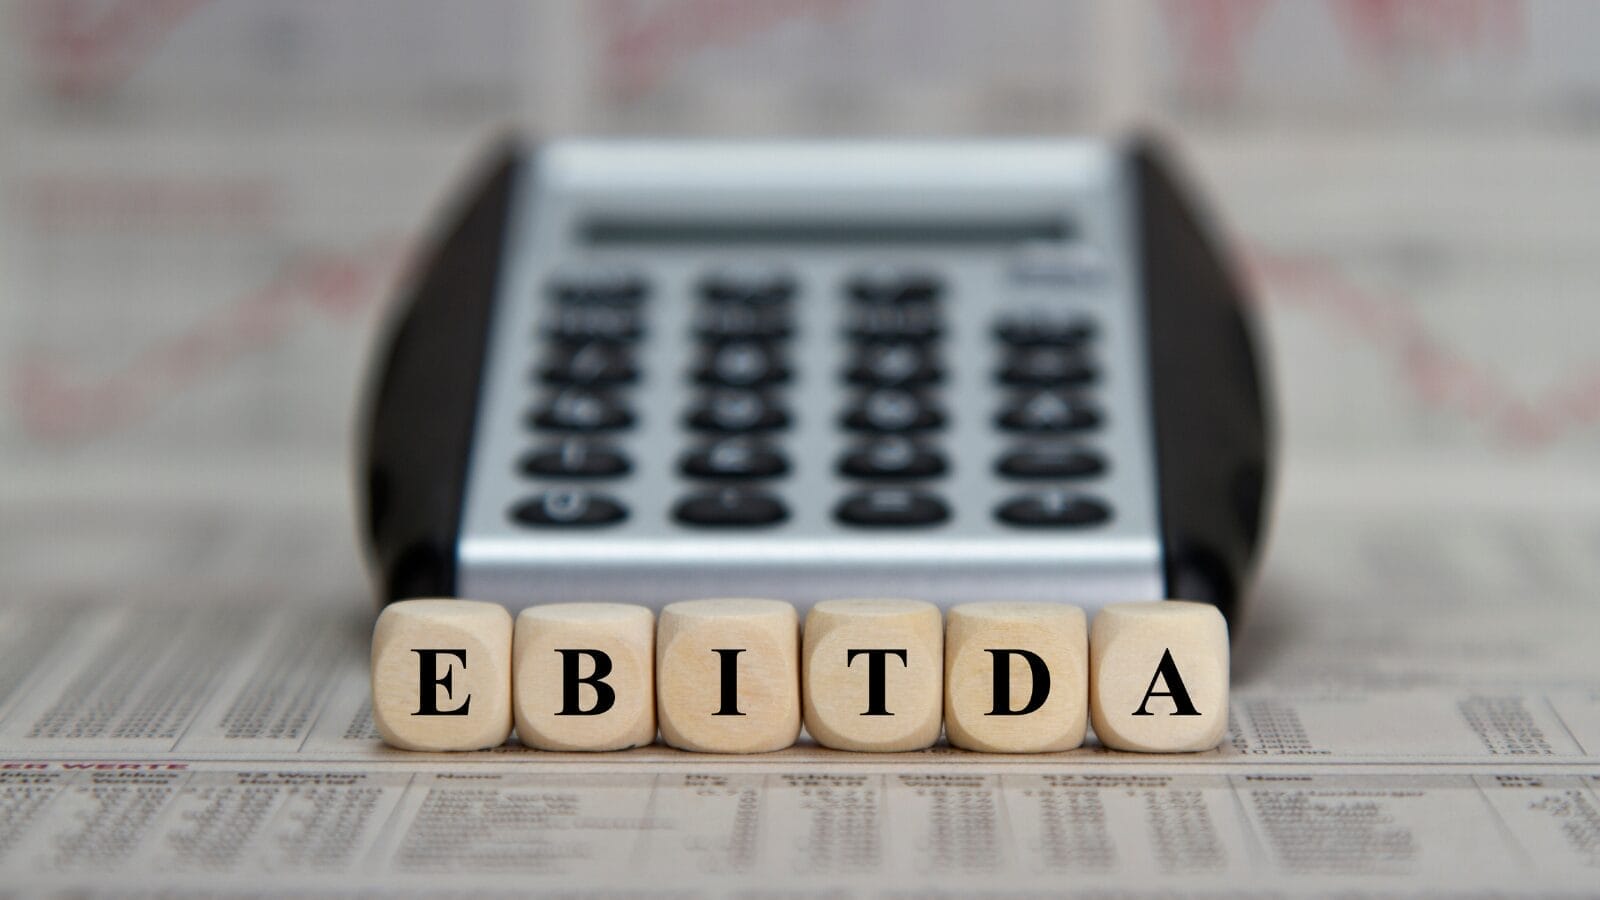 wooden blocks spelling EBITDA in front of a calculator